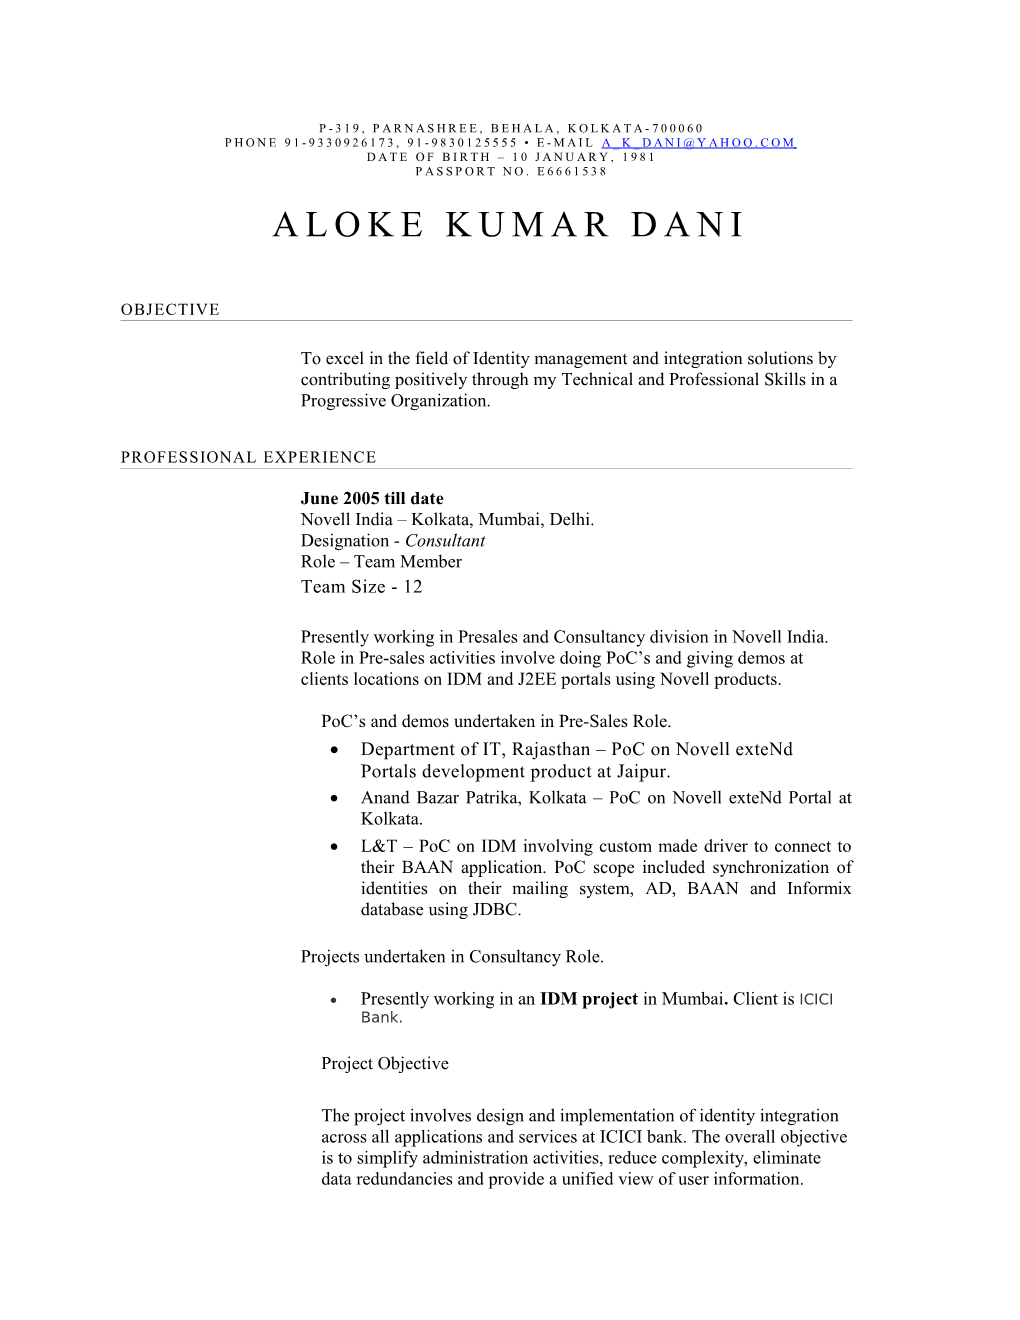 Resume Aloke Kumar Dani